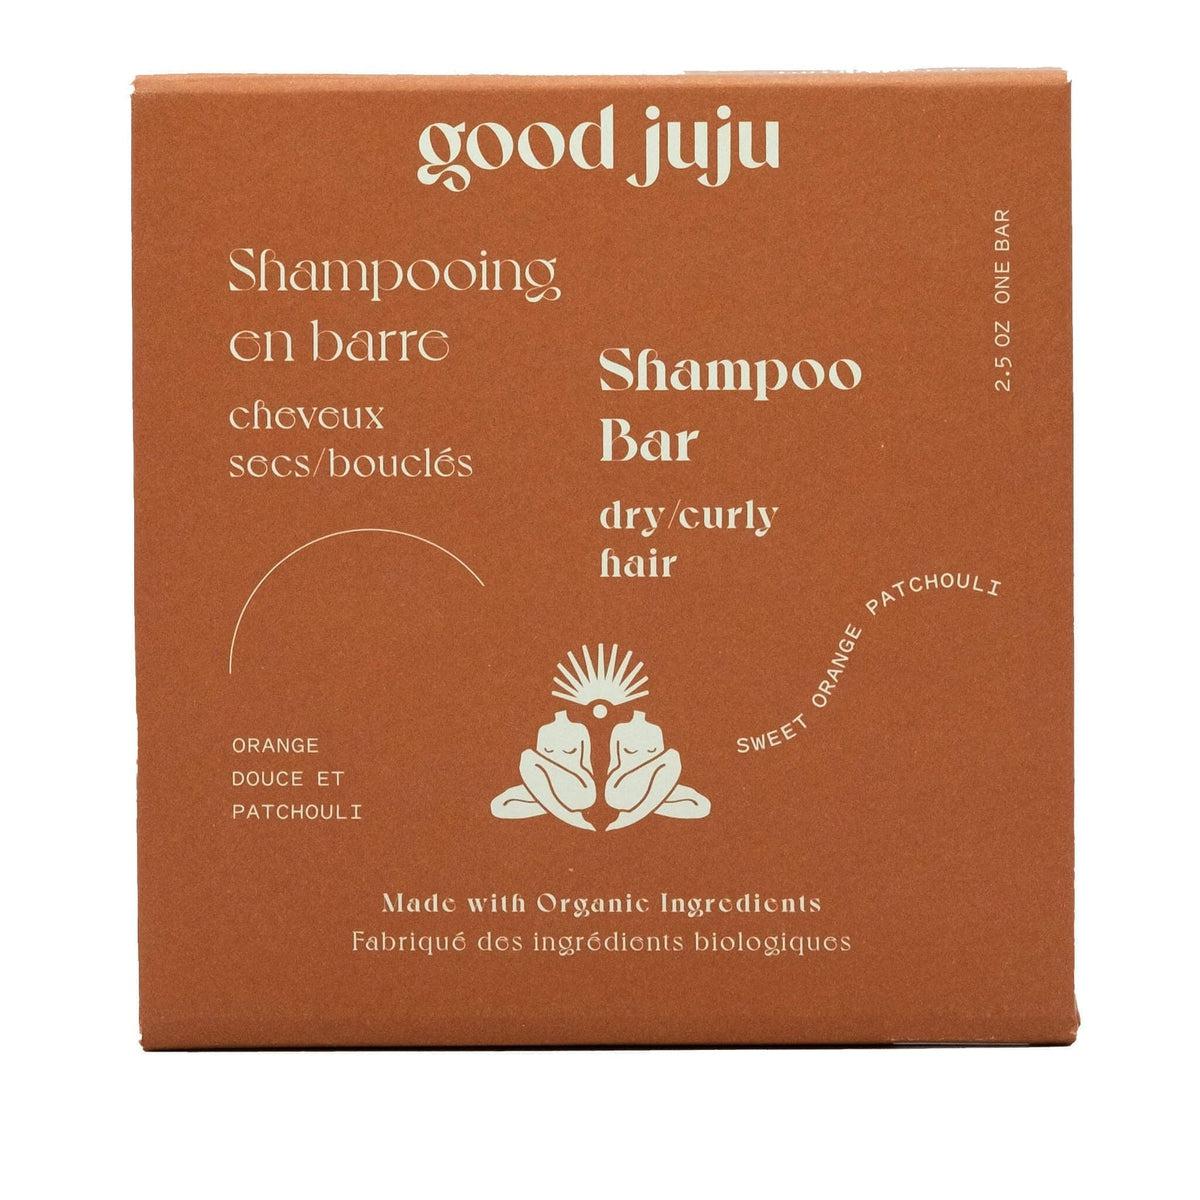 Good Juju Shampoo Bar for Dry/Curly Hair - Blend Box